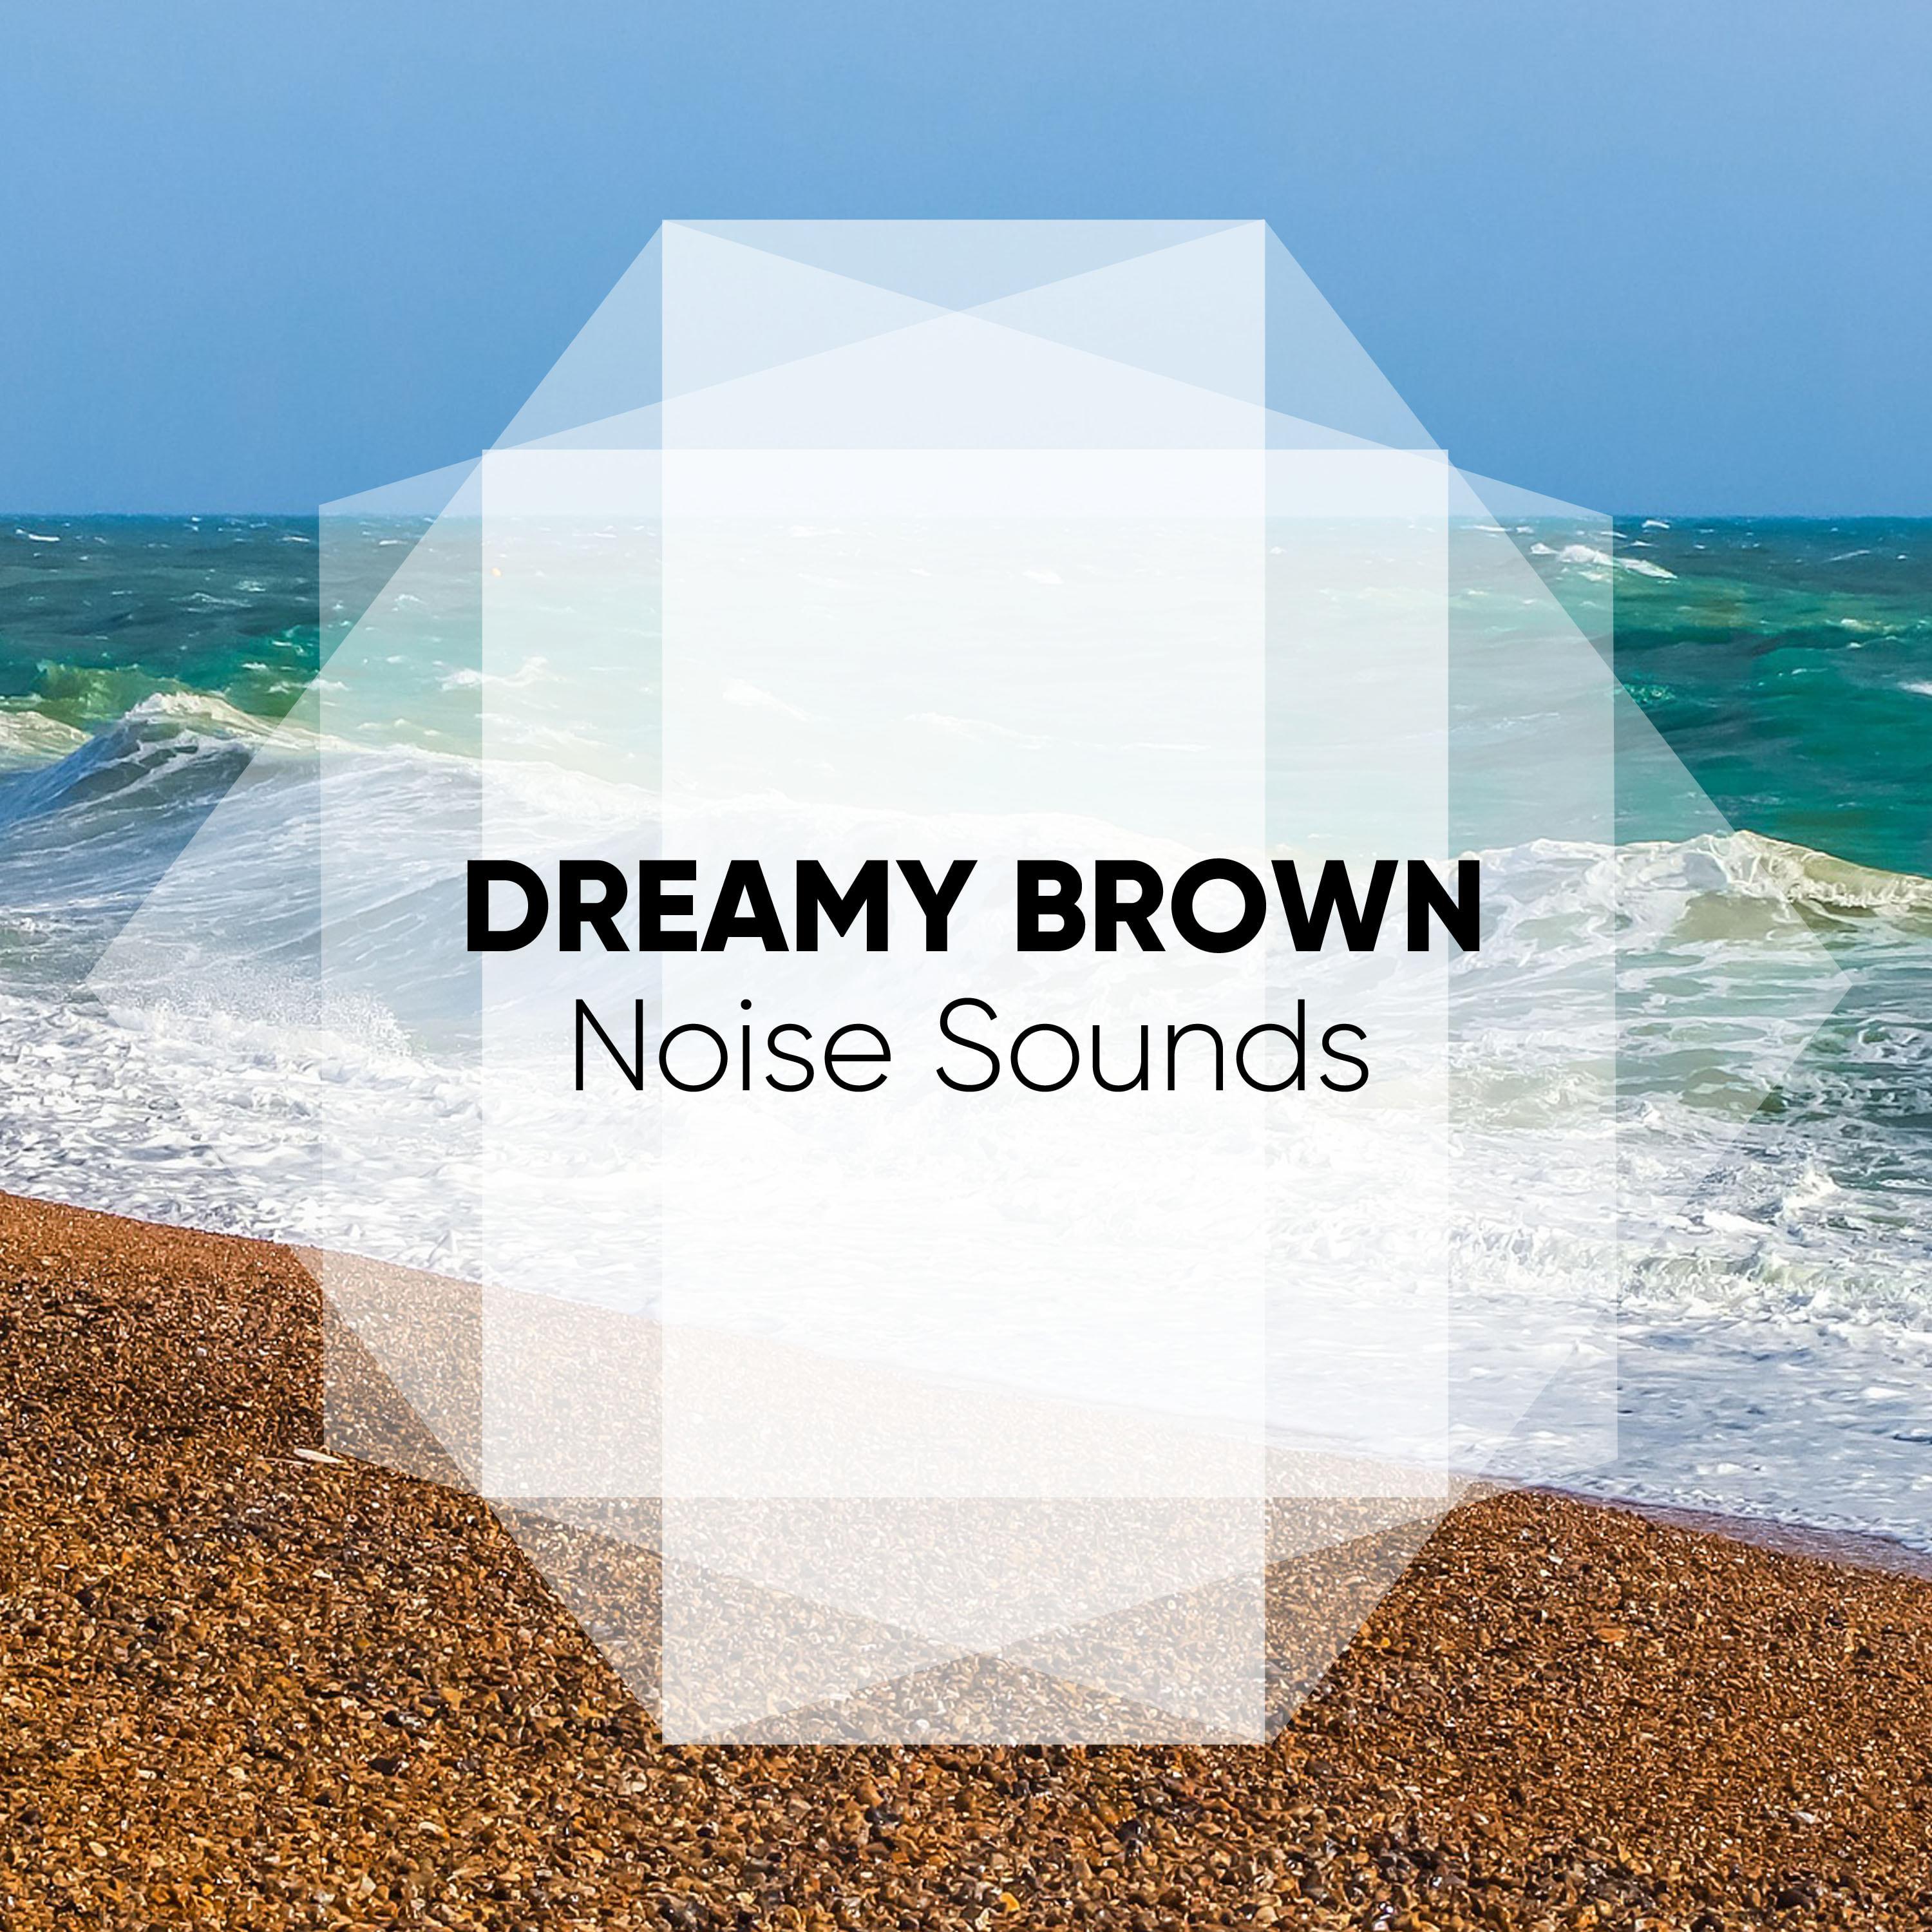 Dreamy Brown Noise Sounds